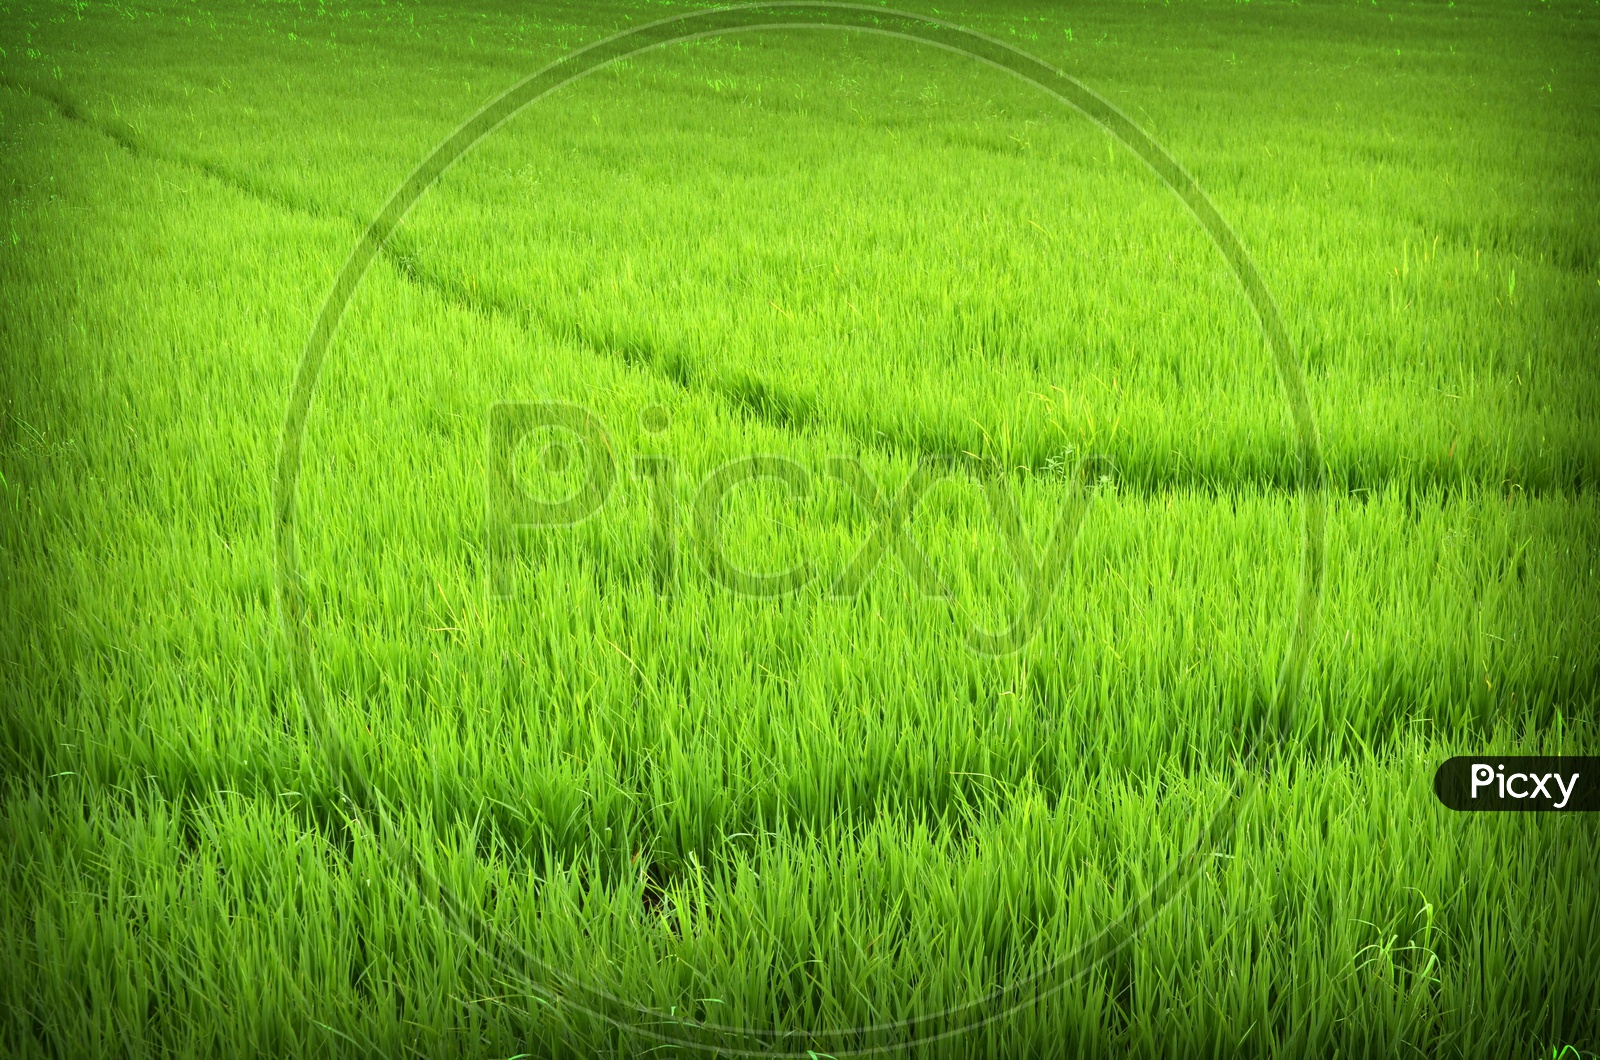 Green rice fields of Thailand